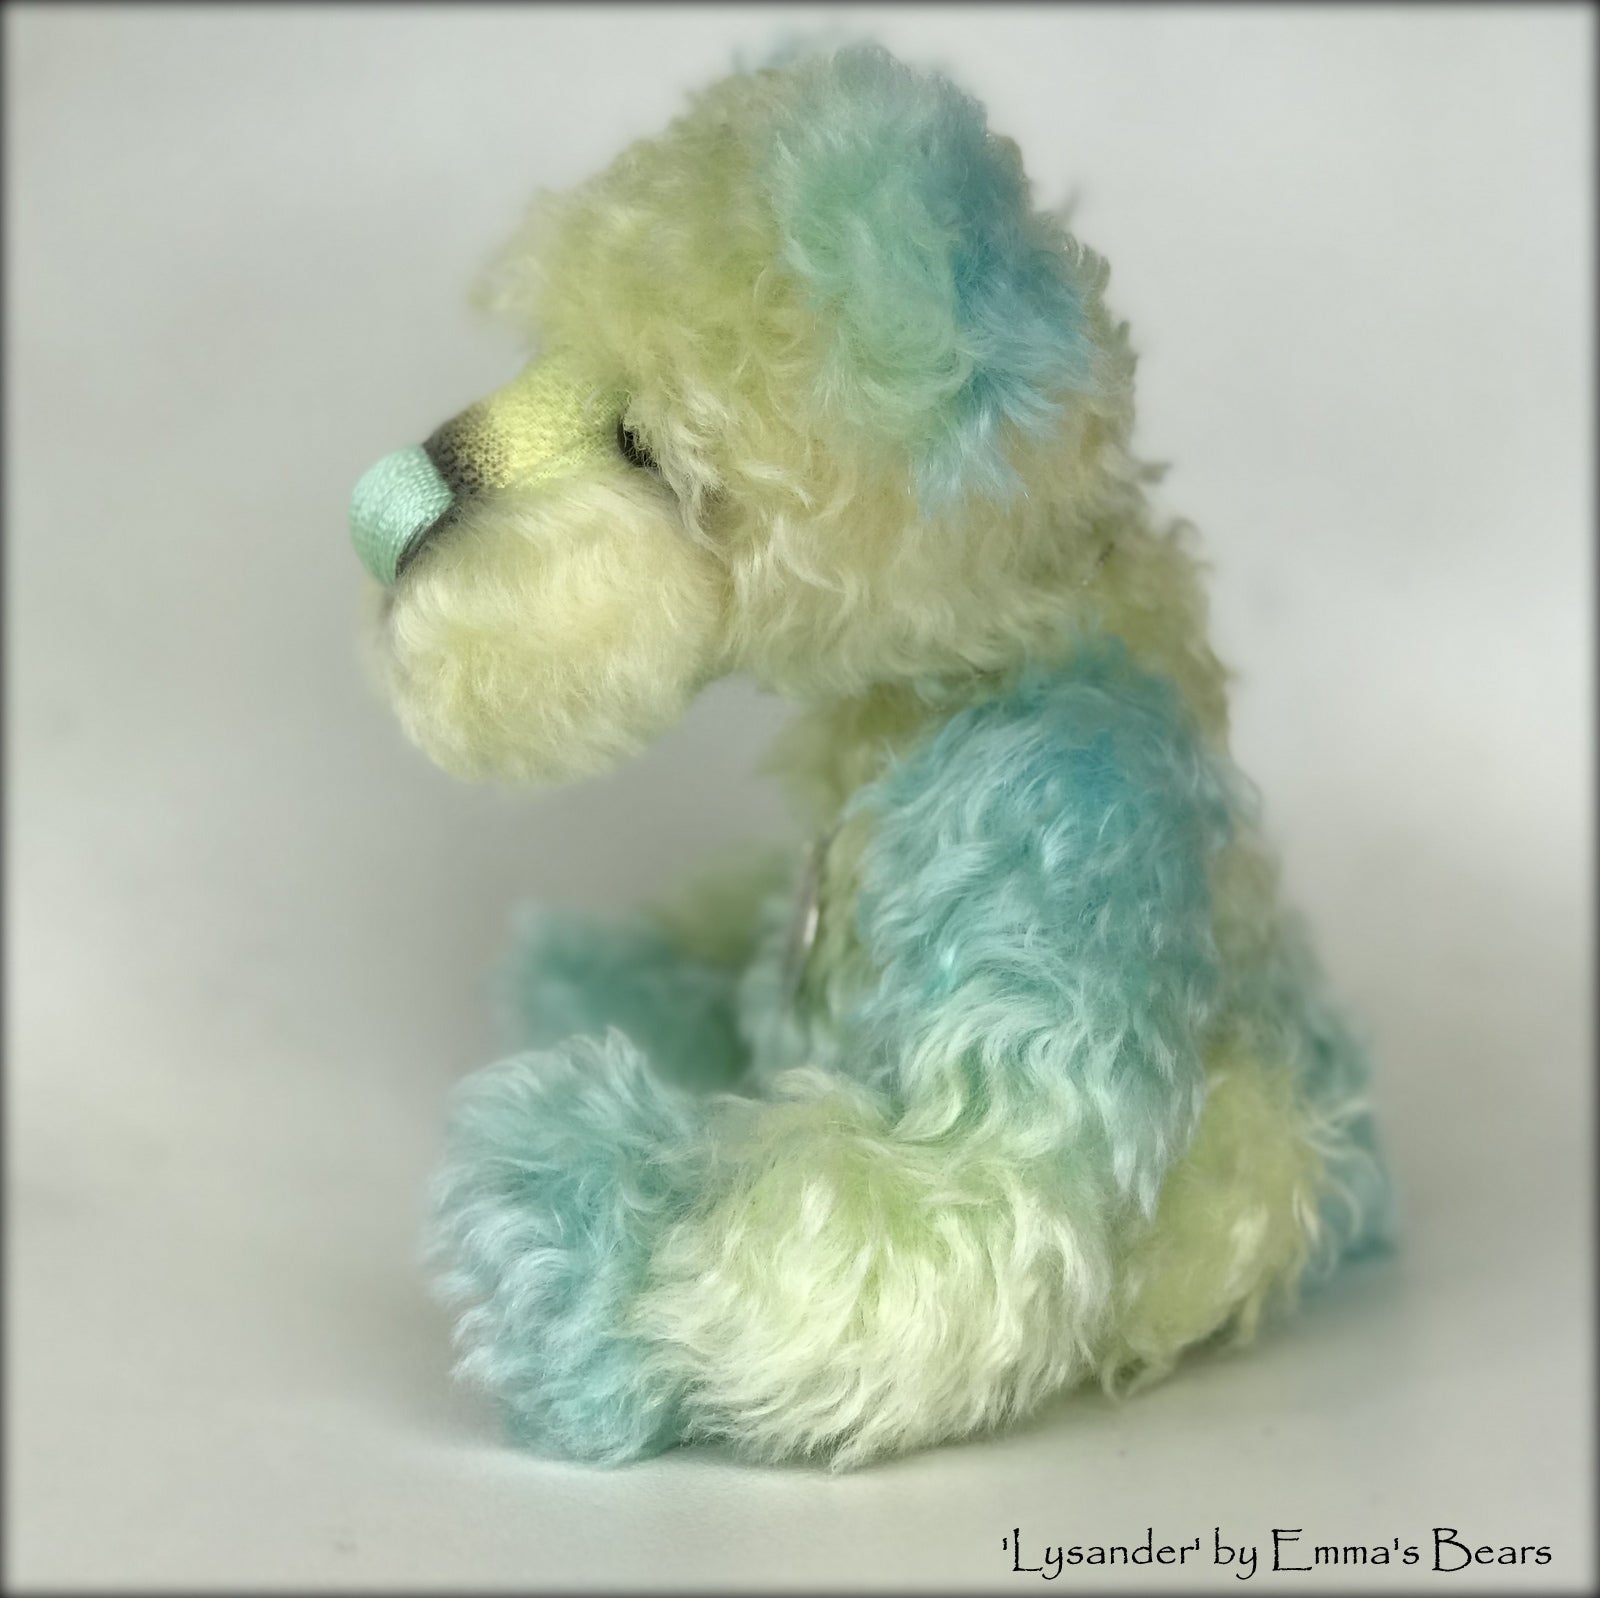 Lysander - 20 Years of Emma's Bears Commemorative Teddy - OOAK in a series